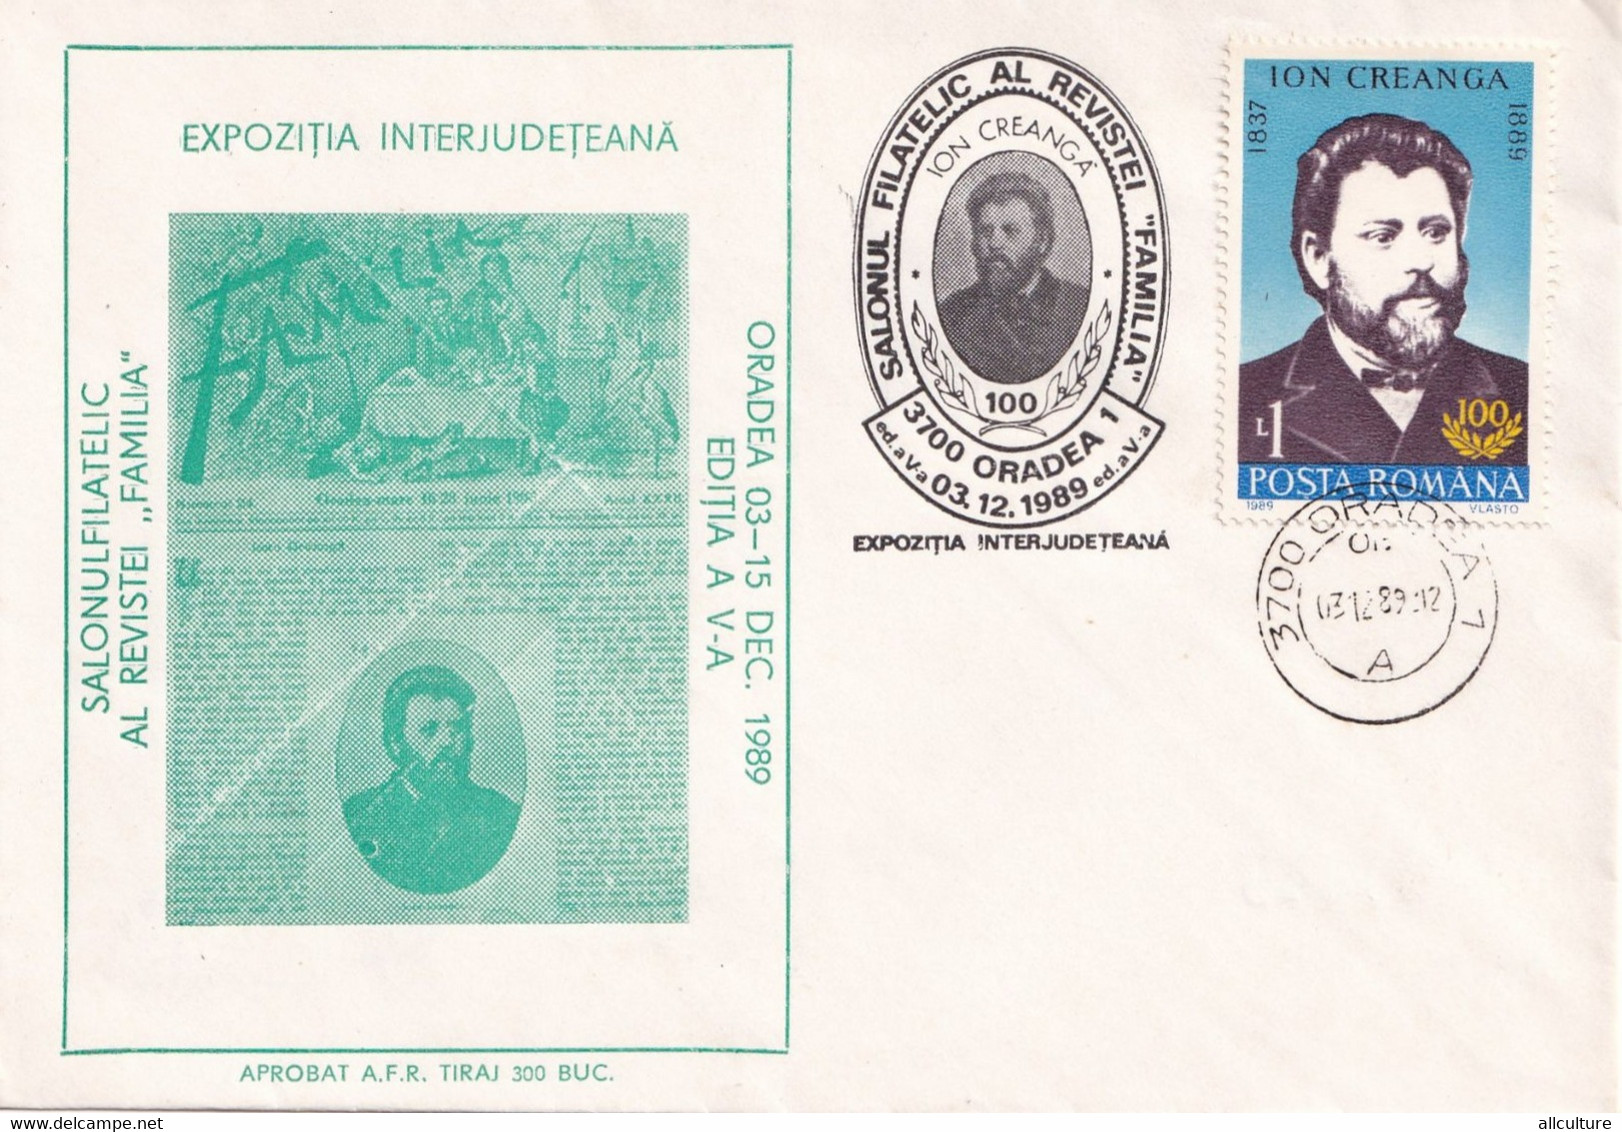 A3017 - Ion Creanga, Scriitor Roman, Expozitia Interjudeteana Oradea 1989 Republica Socialista Romania Posta Romana - Covers & Documents